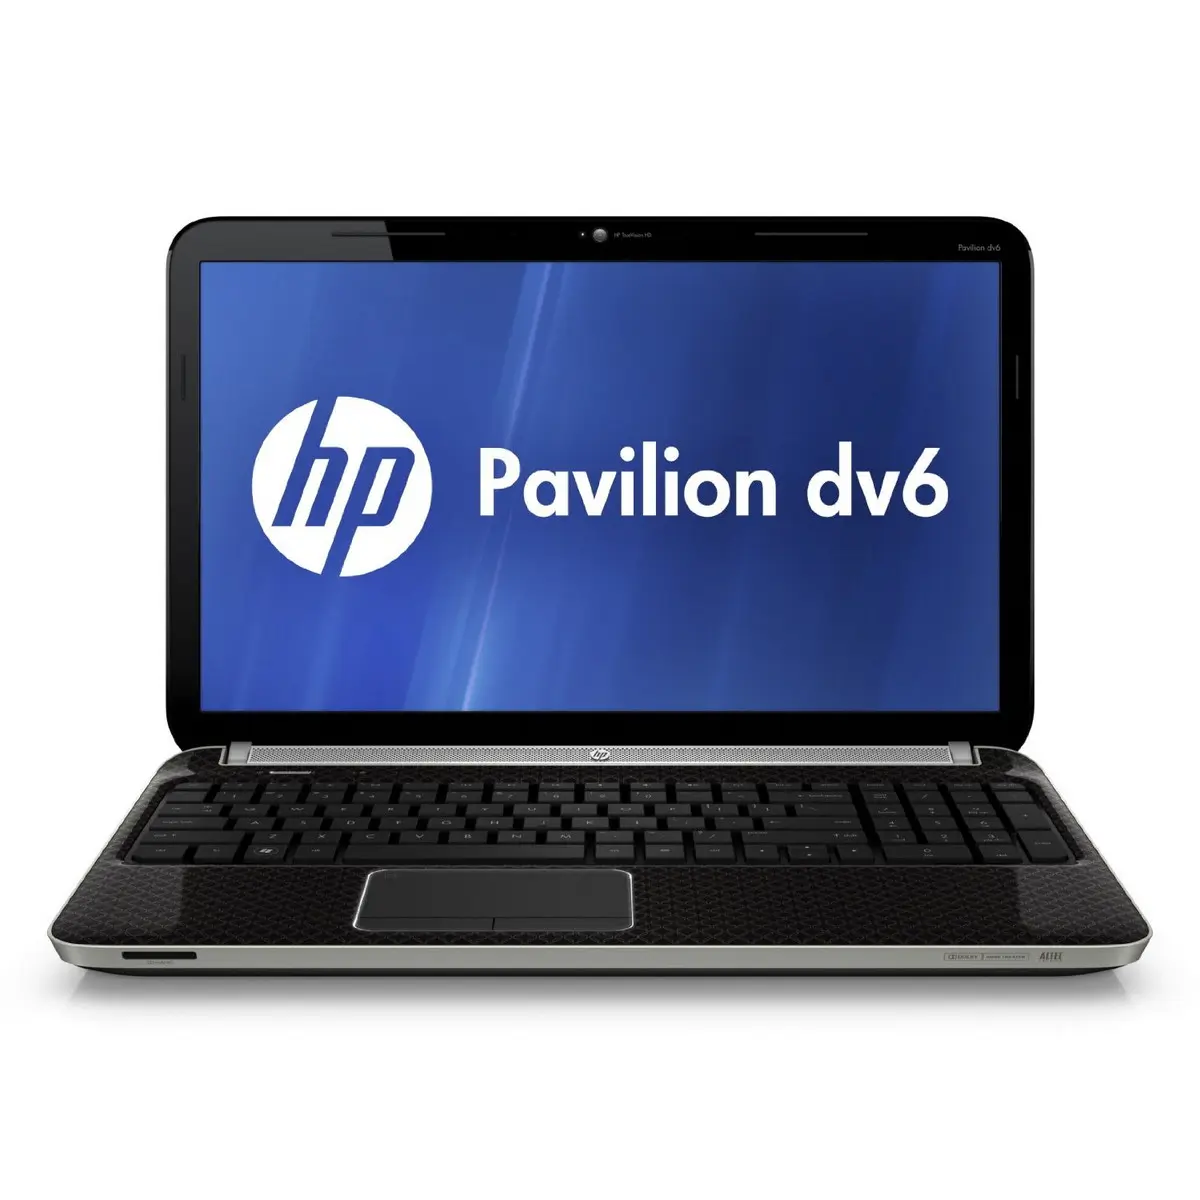 hewlett packard dv6000 specs - What core is HP Pavilion dv6000